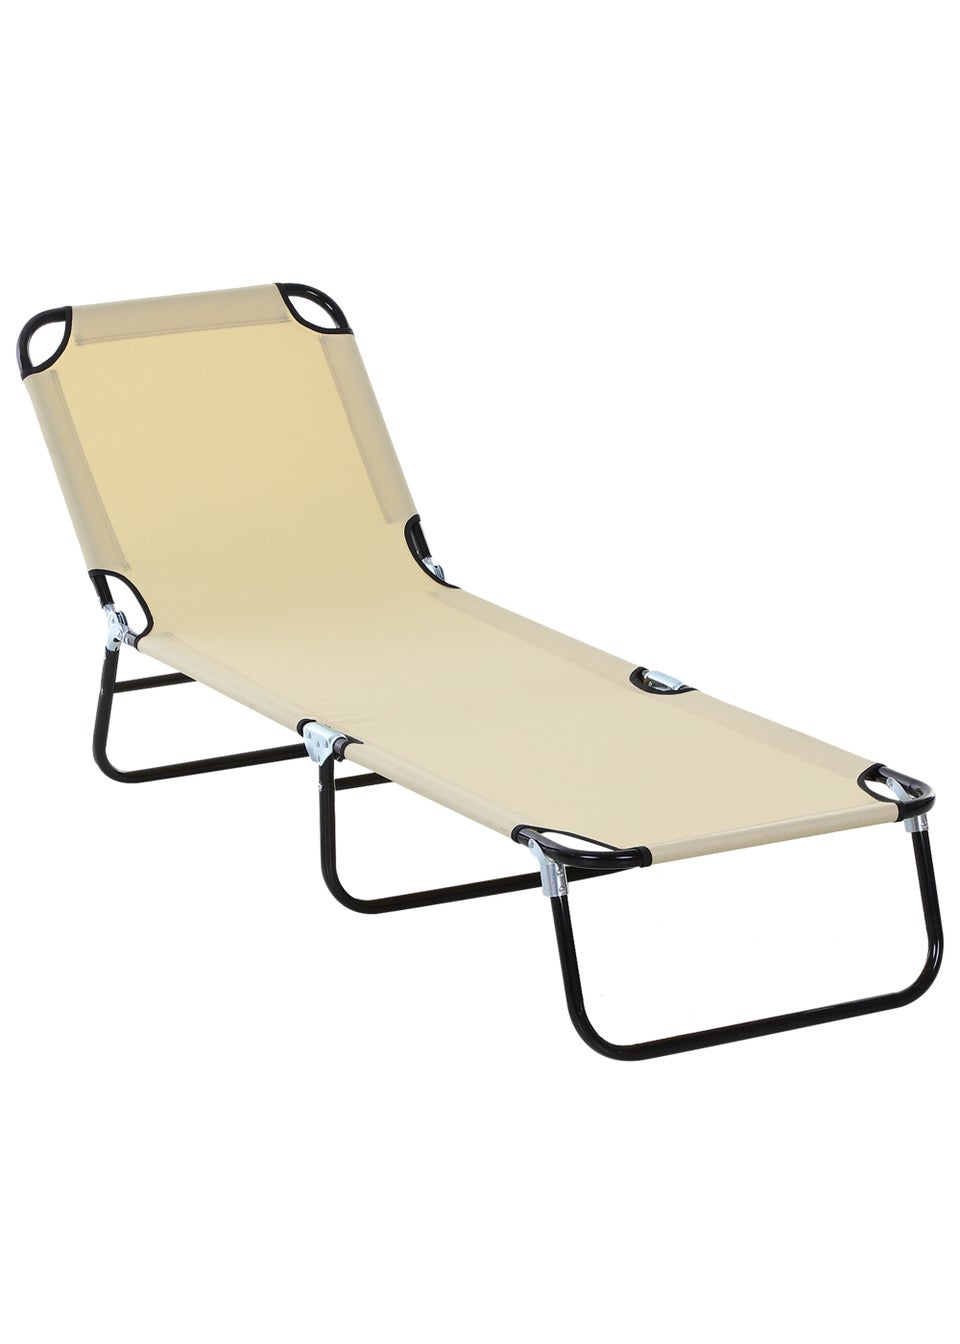 Portable Folding Sun Lounger w/ 5-Position Adjustable Backrest Recliner Beige